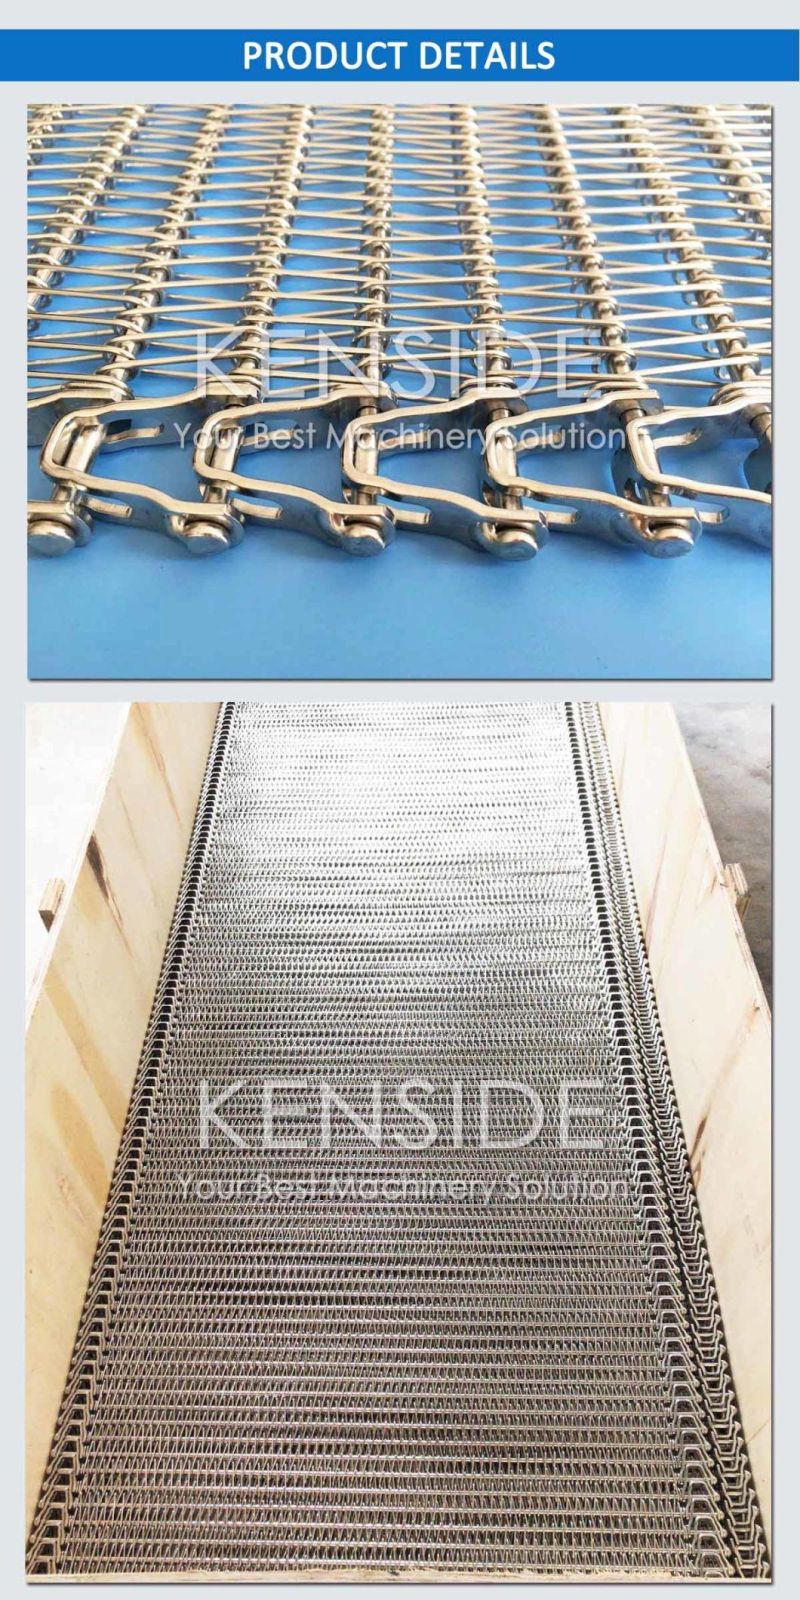 Space Saver Conveyor Belt Stainless Steel Belt for Spiral Coolers